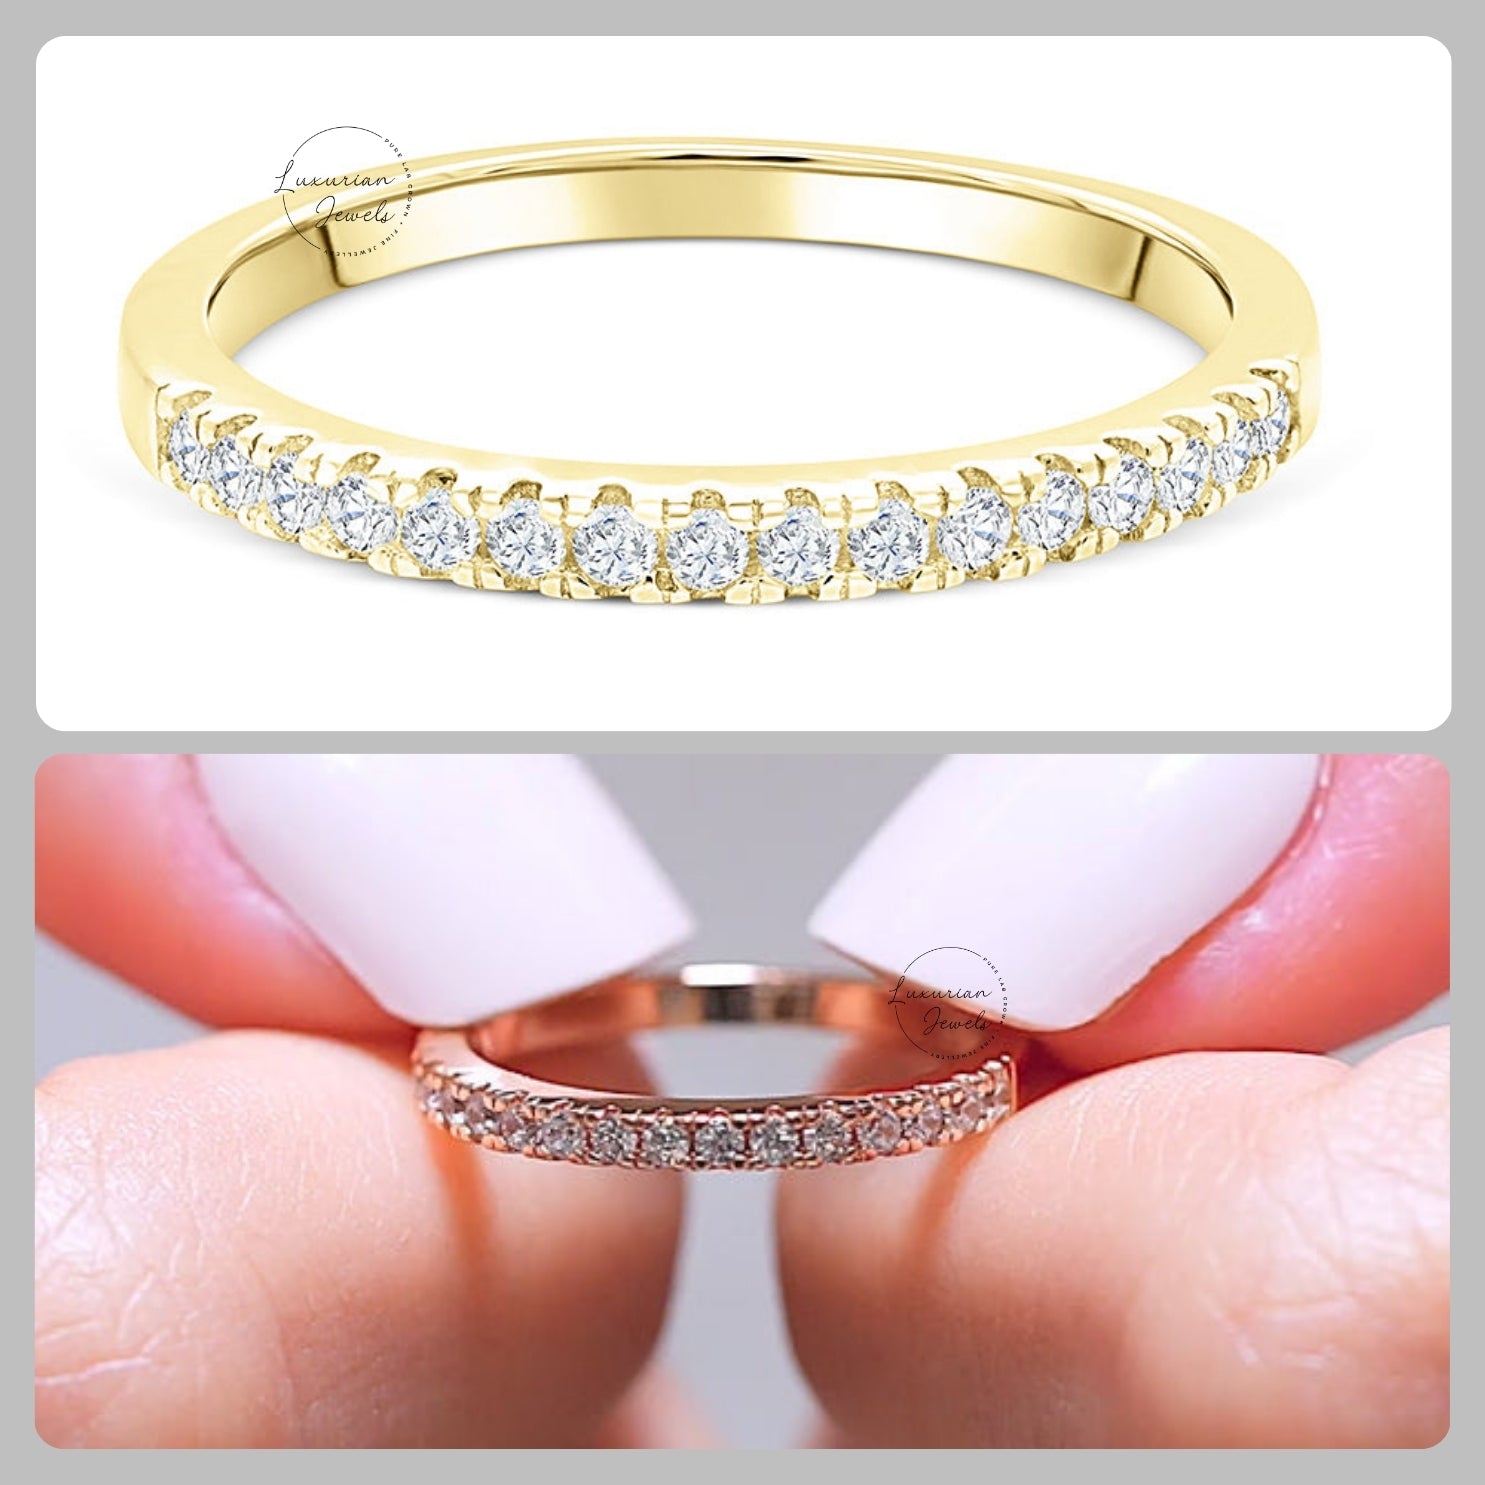 Round Cut Half Eternity Diamond Ring